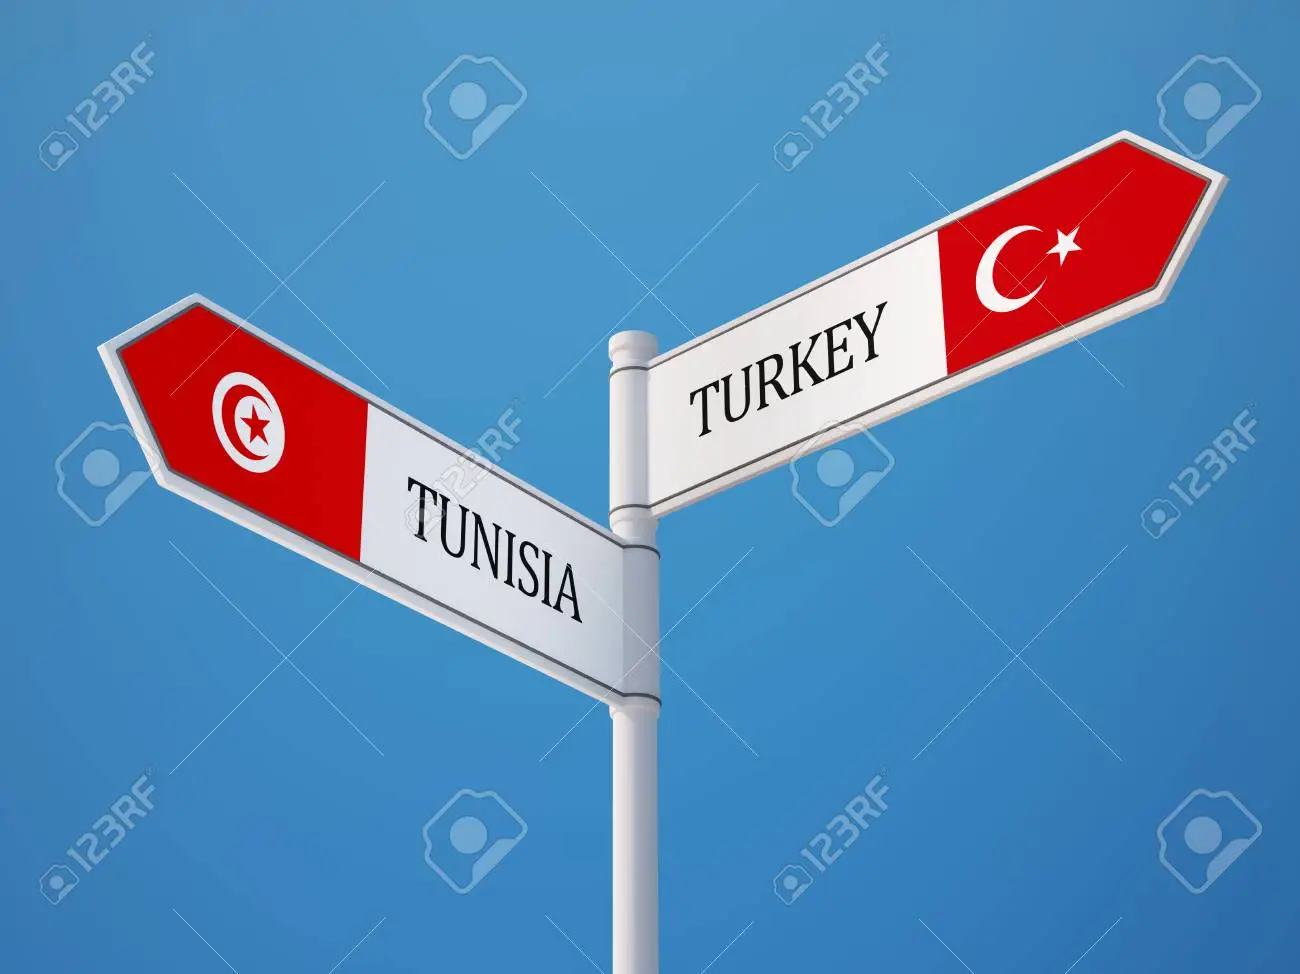 Tunisia summons Turkish ambassador in response to Erdogan’s comments